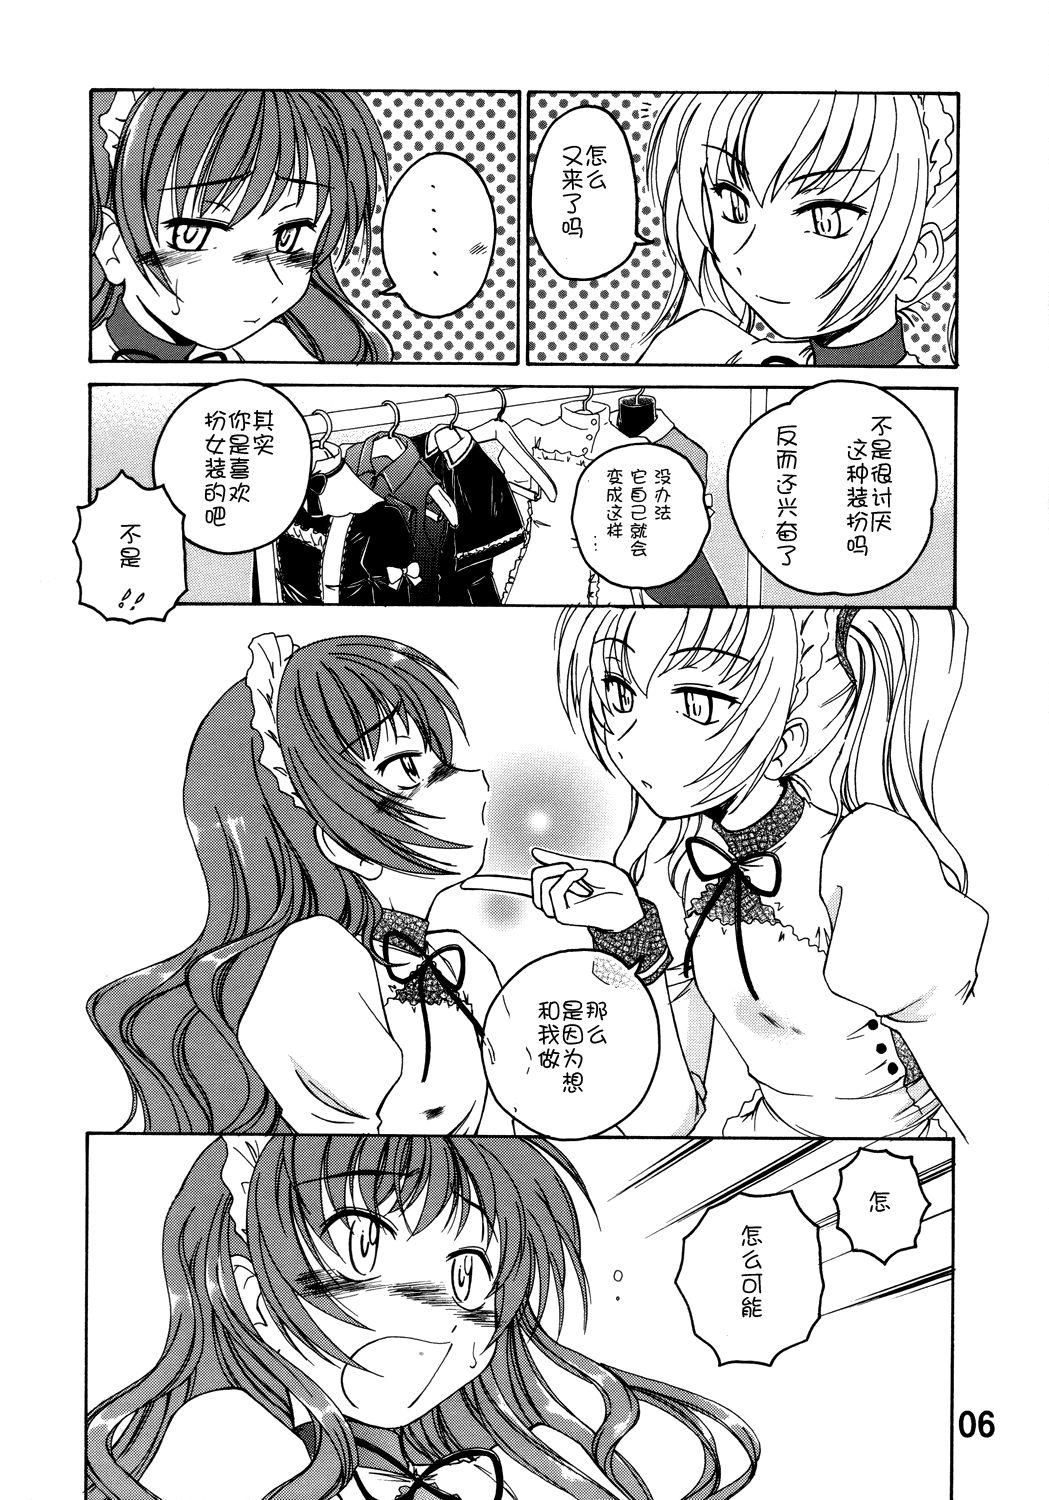 Love Manga Sangyou Haikibutsu 11 - Comic Industrial Wastes 11 - Princess princess Teenager - Page 5